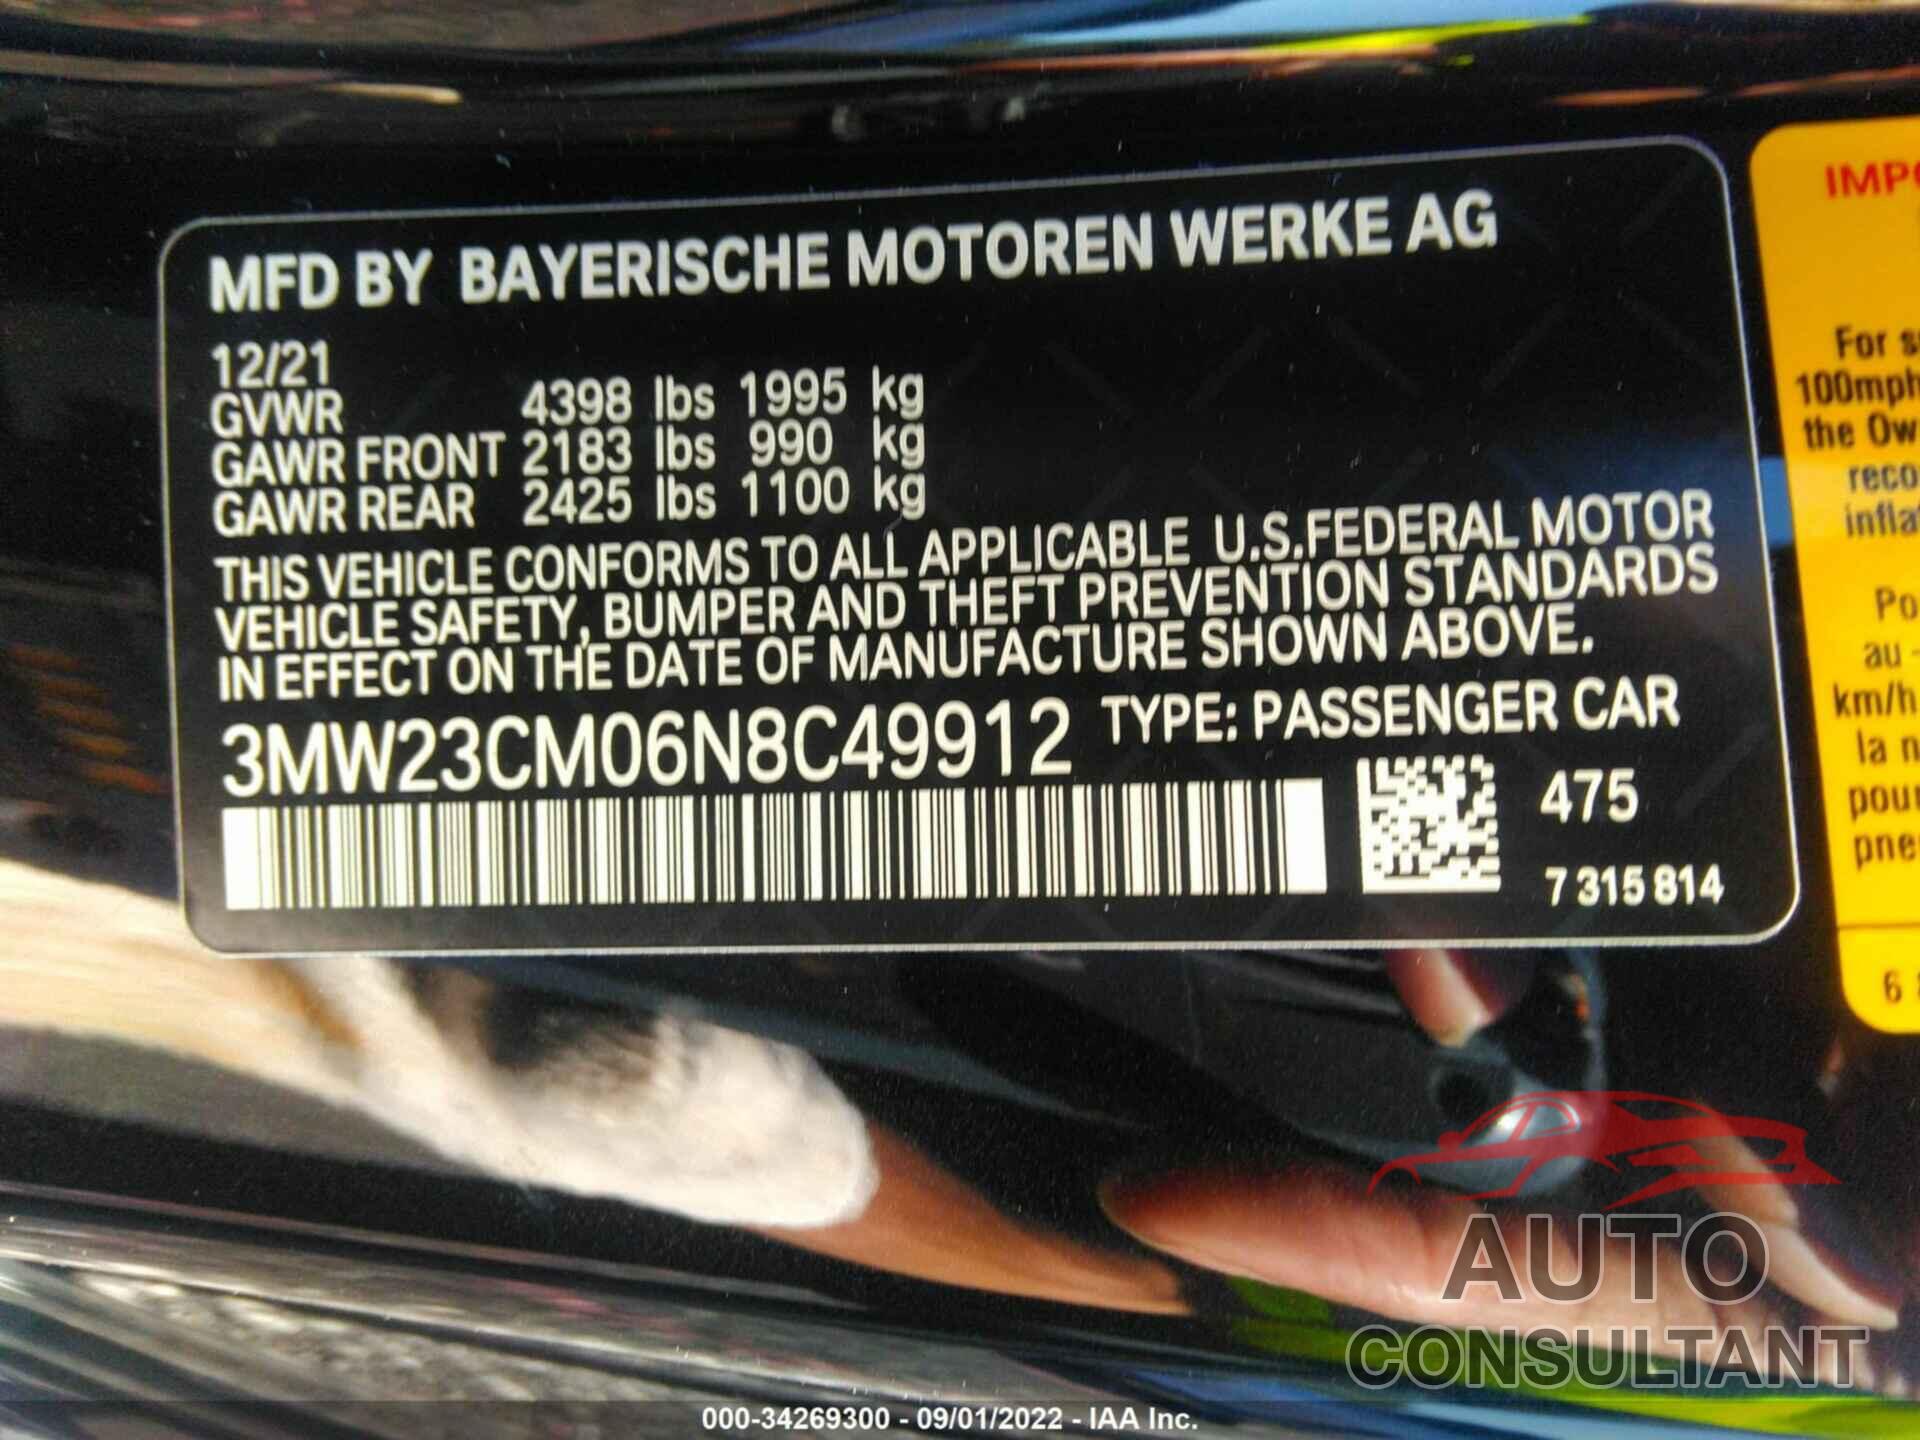 BMW 2 SERIES 2022 - 3MW23CM06N8C49912